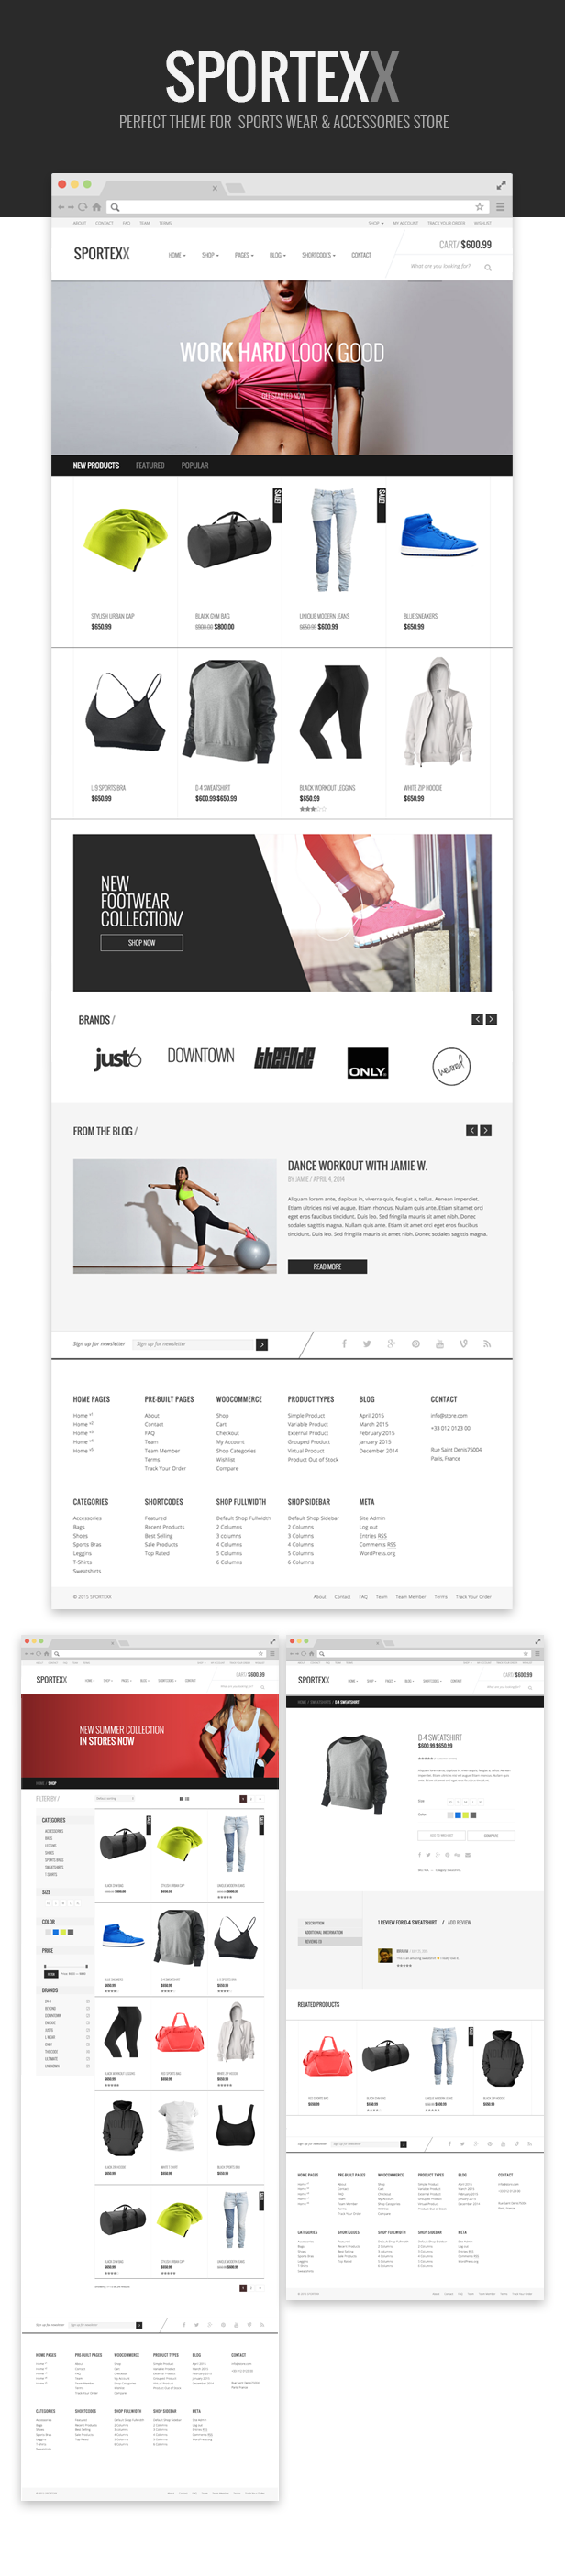 Sportexx - Sports & Gym Fashion WooCommerce Theme - 6